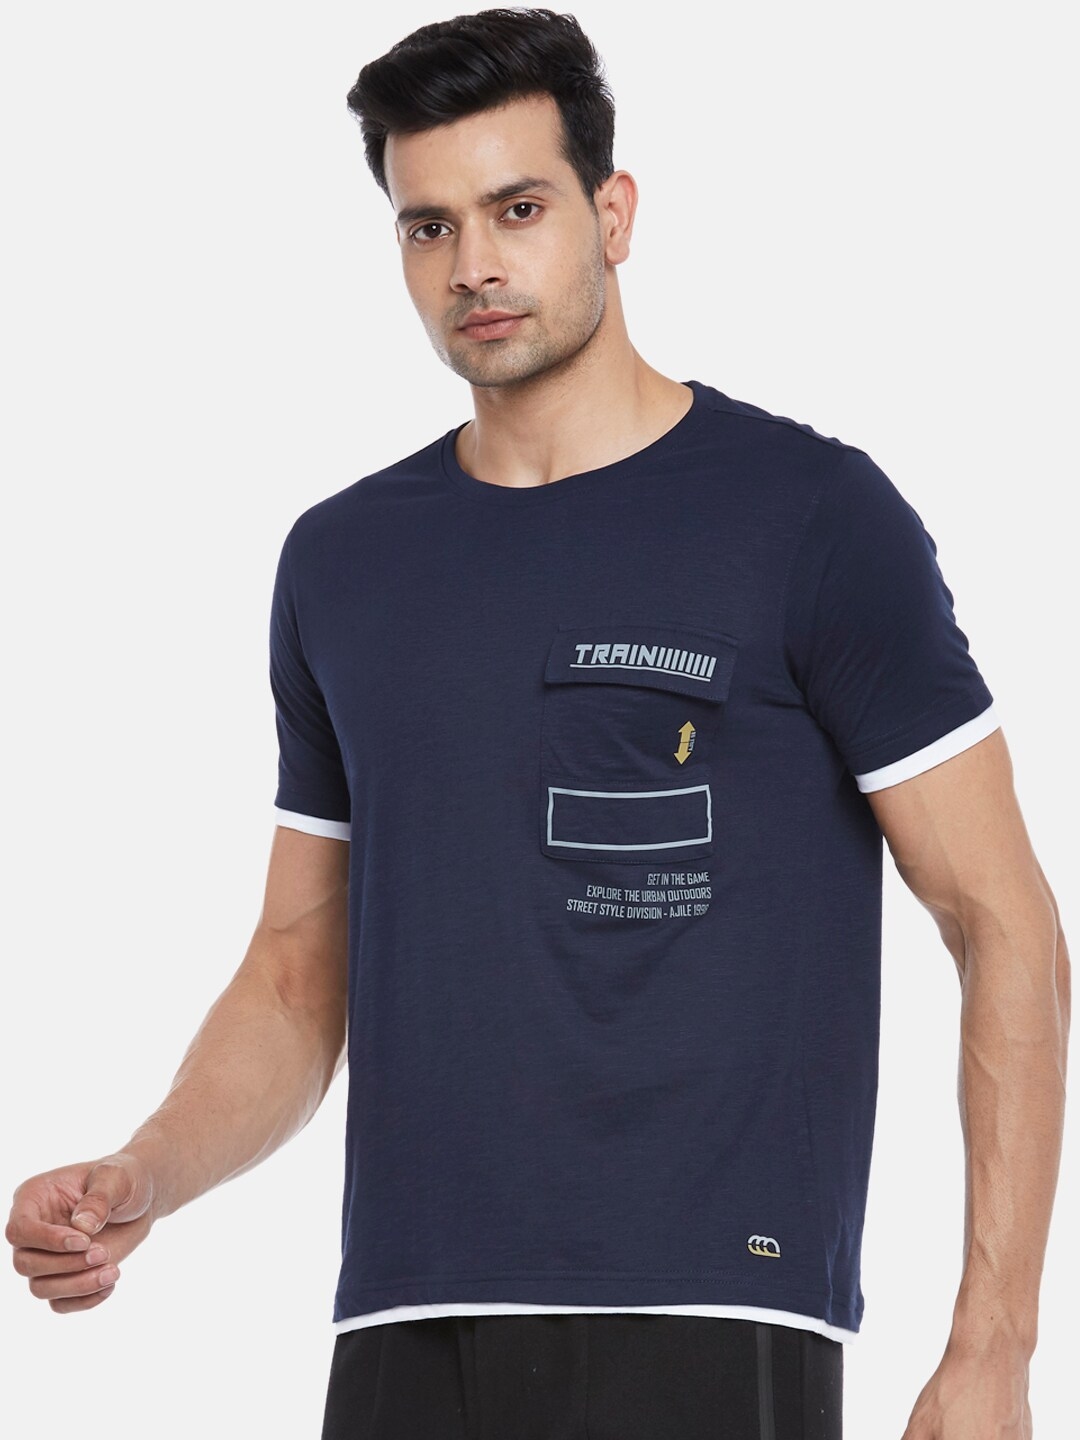 Ajile by Pantaloons Teal Slim Fit Printed T-Shirt